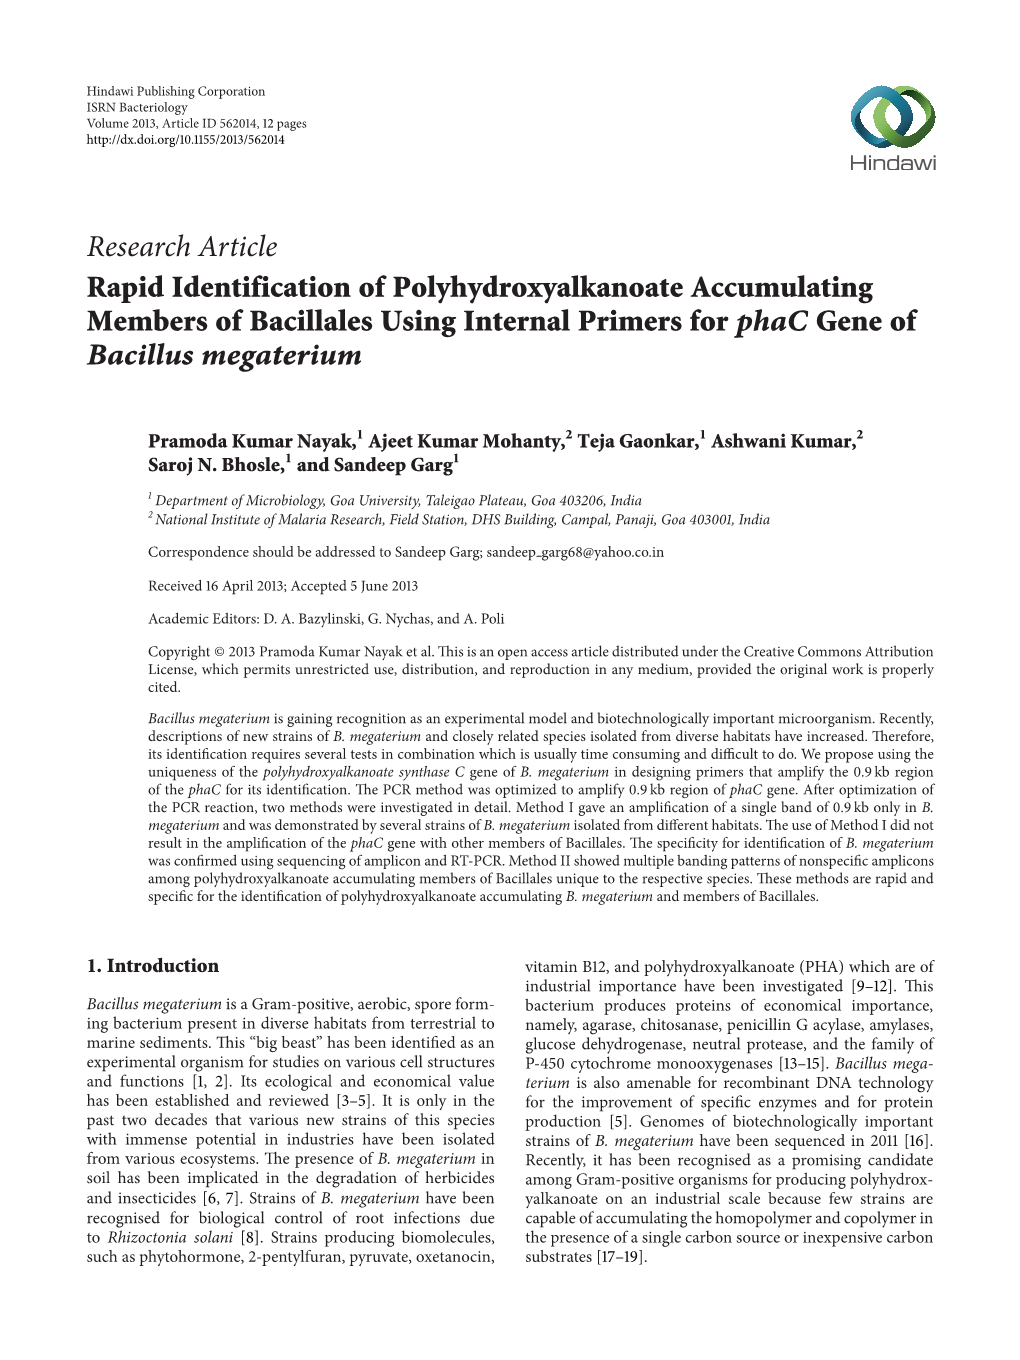 Research Article Rapid Identification of Polyhydroxyalkanoate Accumulating Members of Bacillales Using Internal Primers for Phac Gene of Bacillus Megaterium